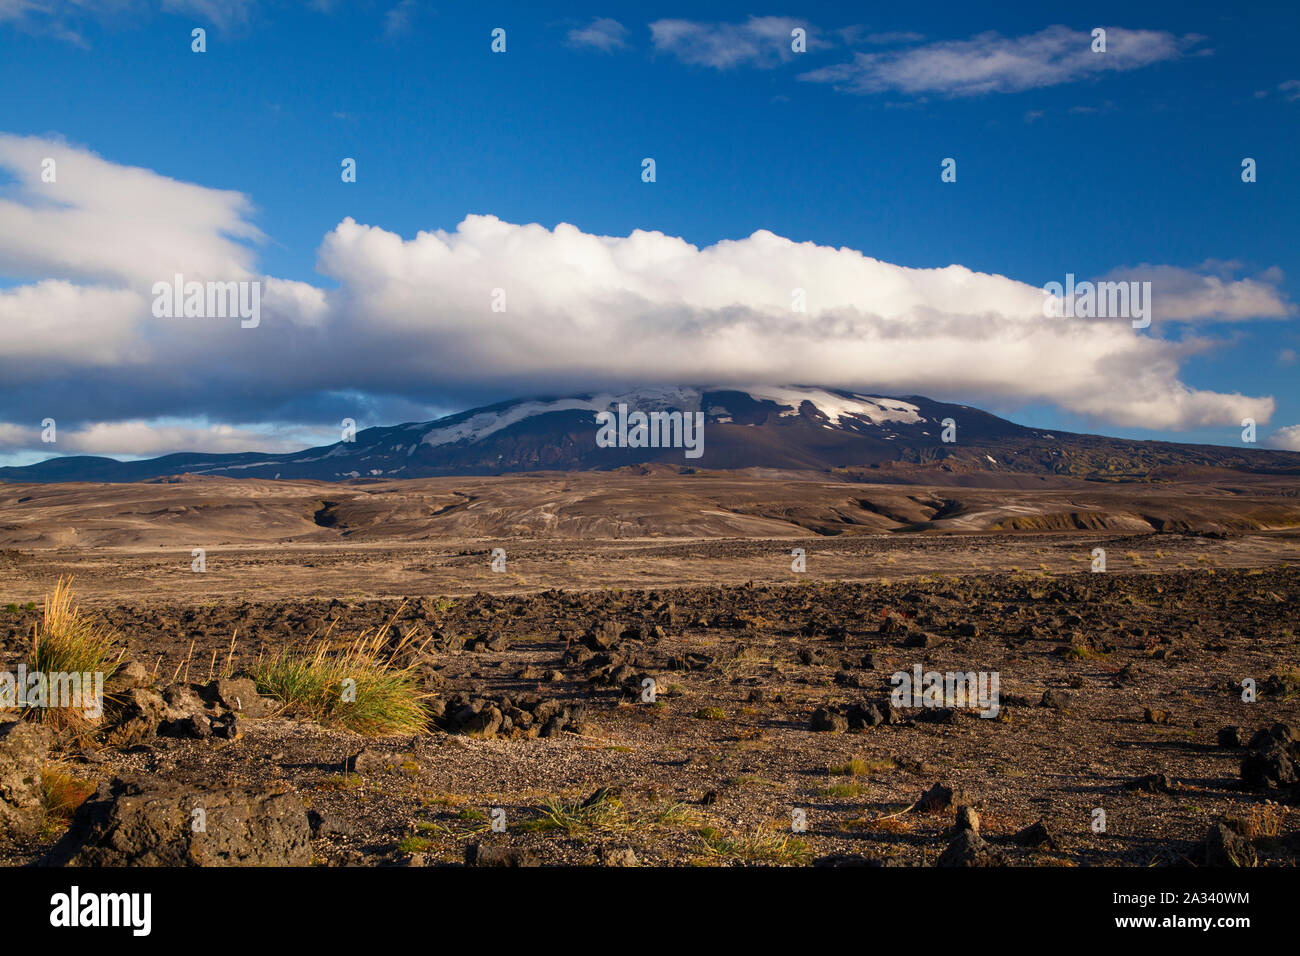 Volcán hekla islandia fotografías e imágenes de alta resolución - Alamy